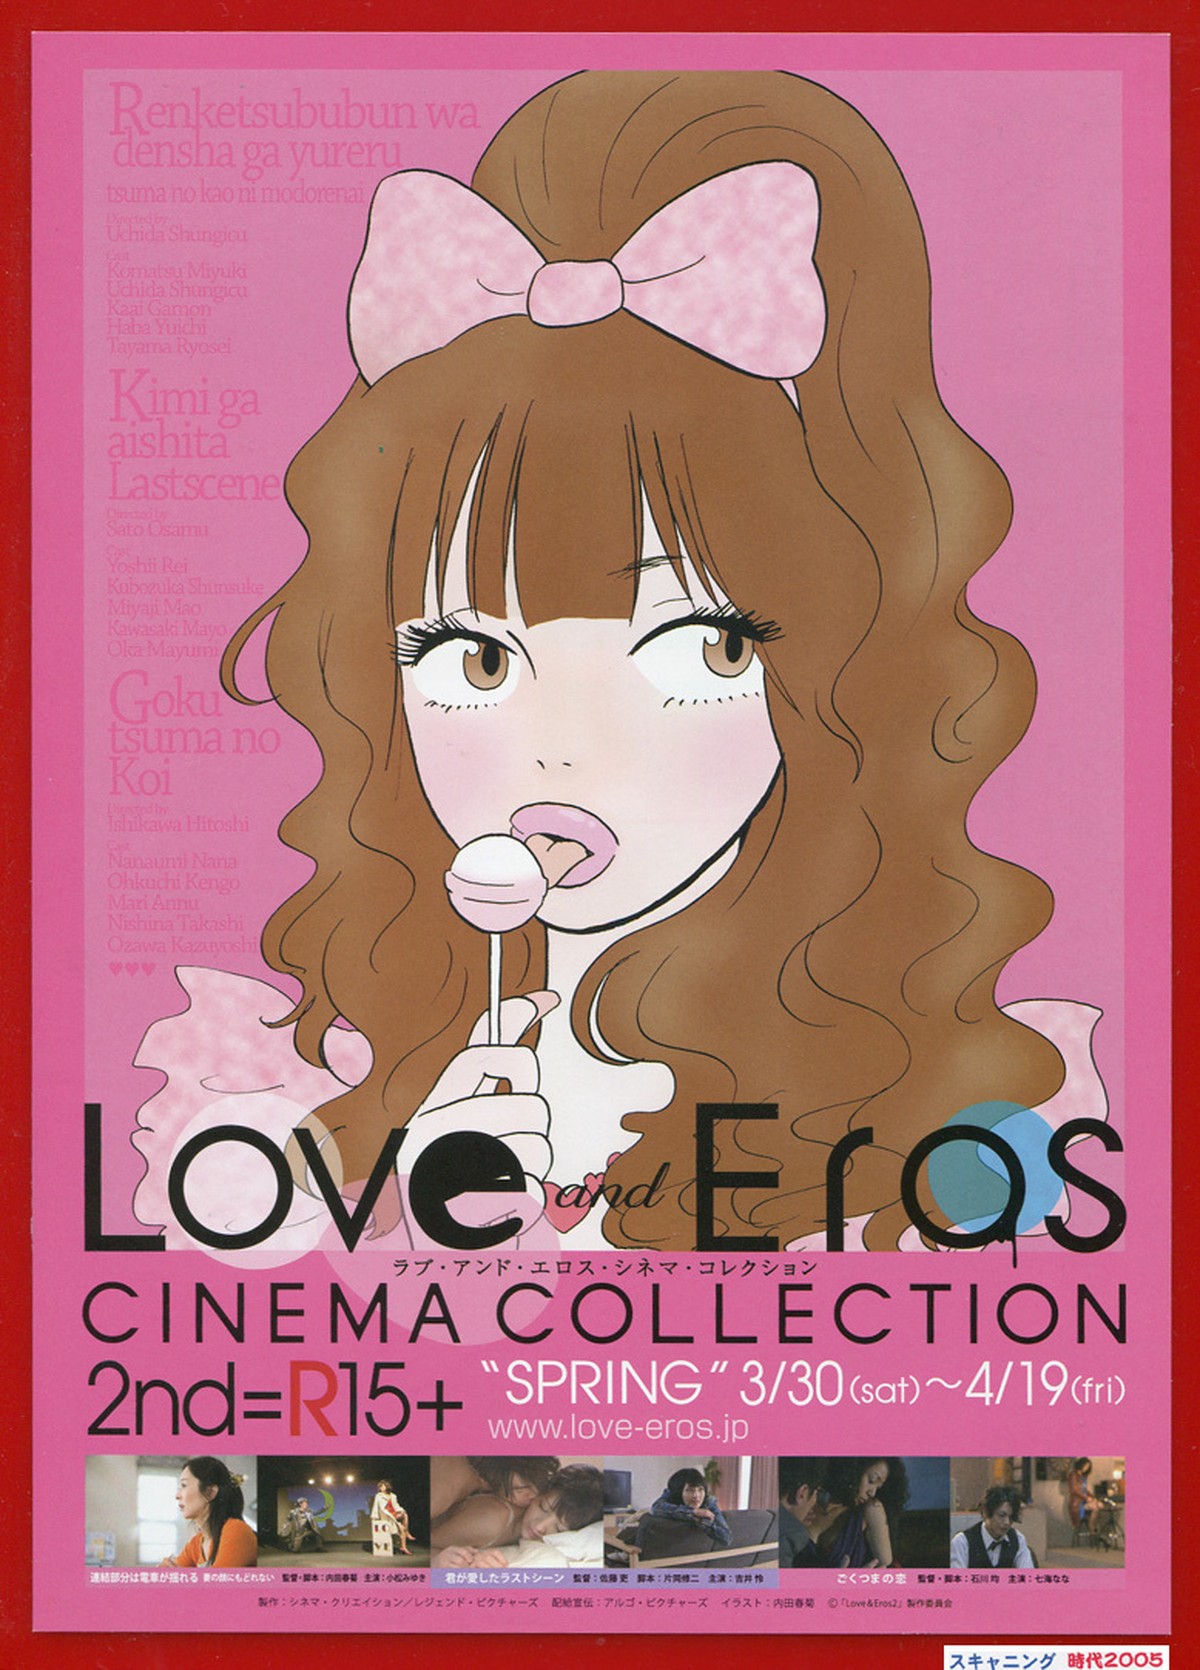 Love And Eros Cinema Collection 2nd R15 Spring ラブ アンド エロス シネマ コレクション 映画チラシ販売 大辞典